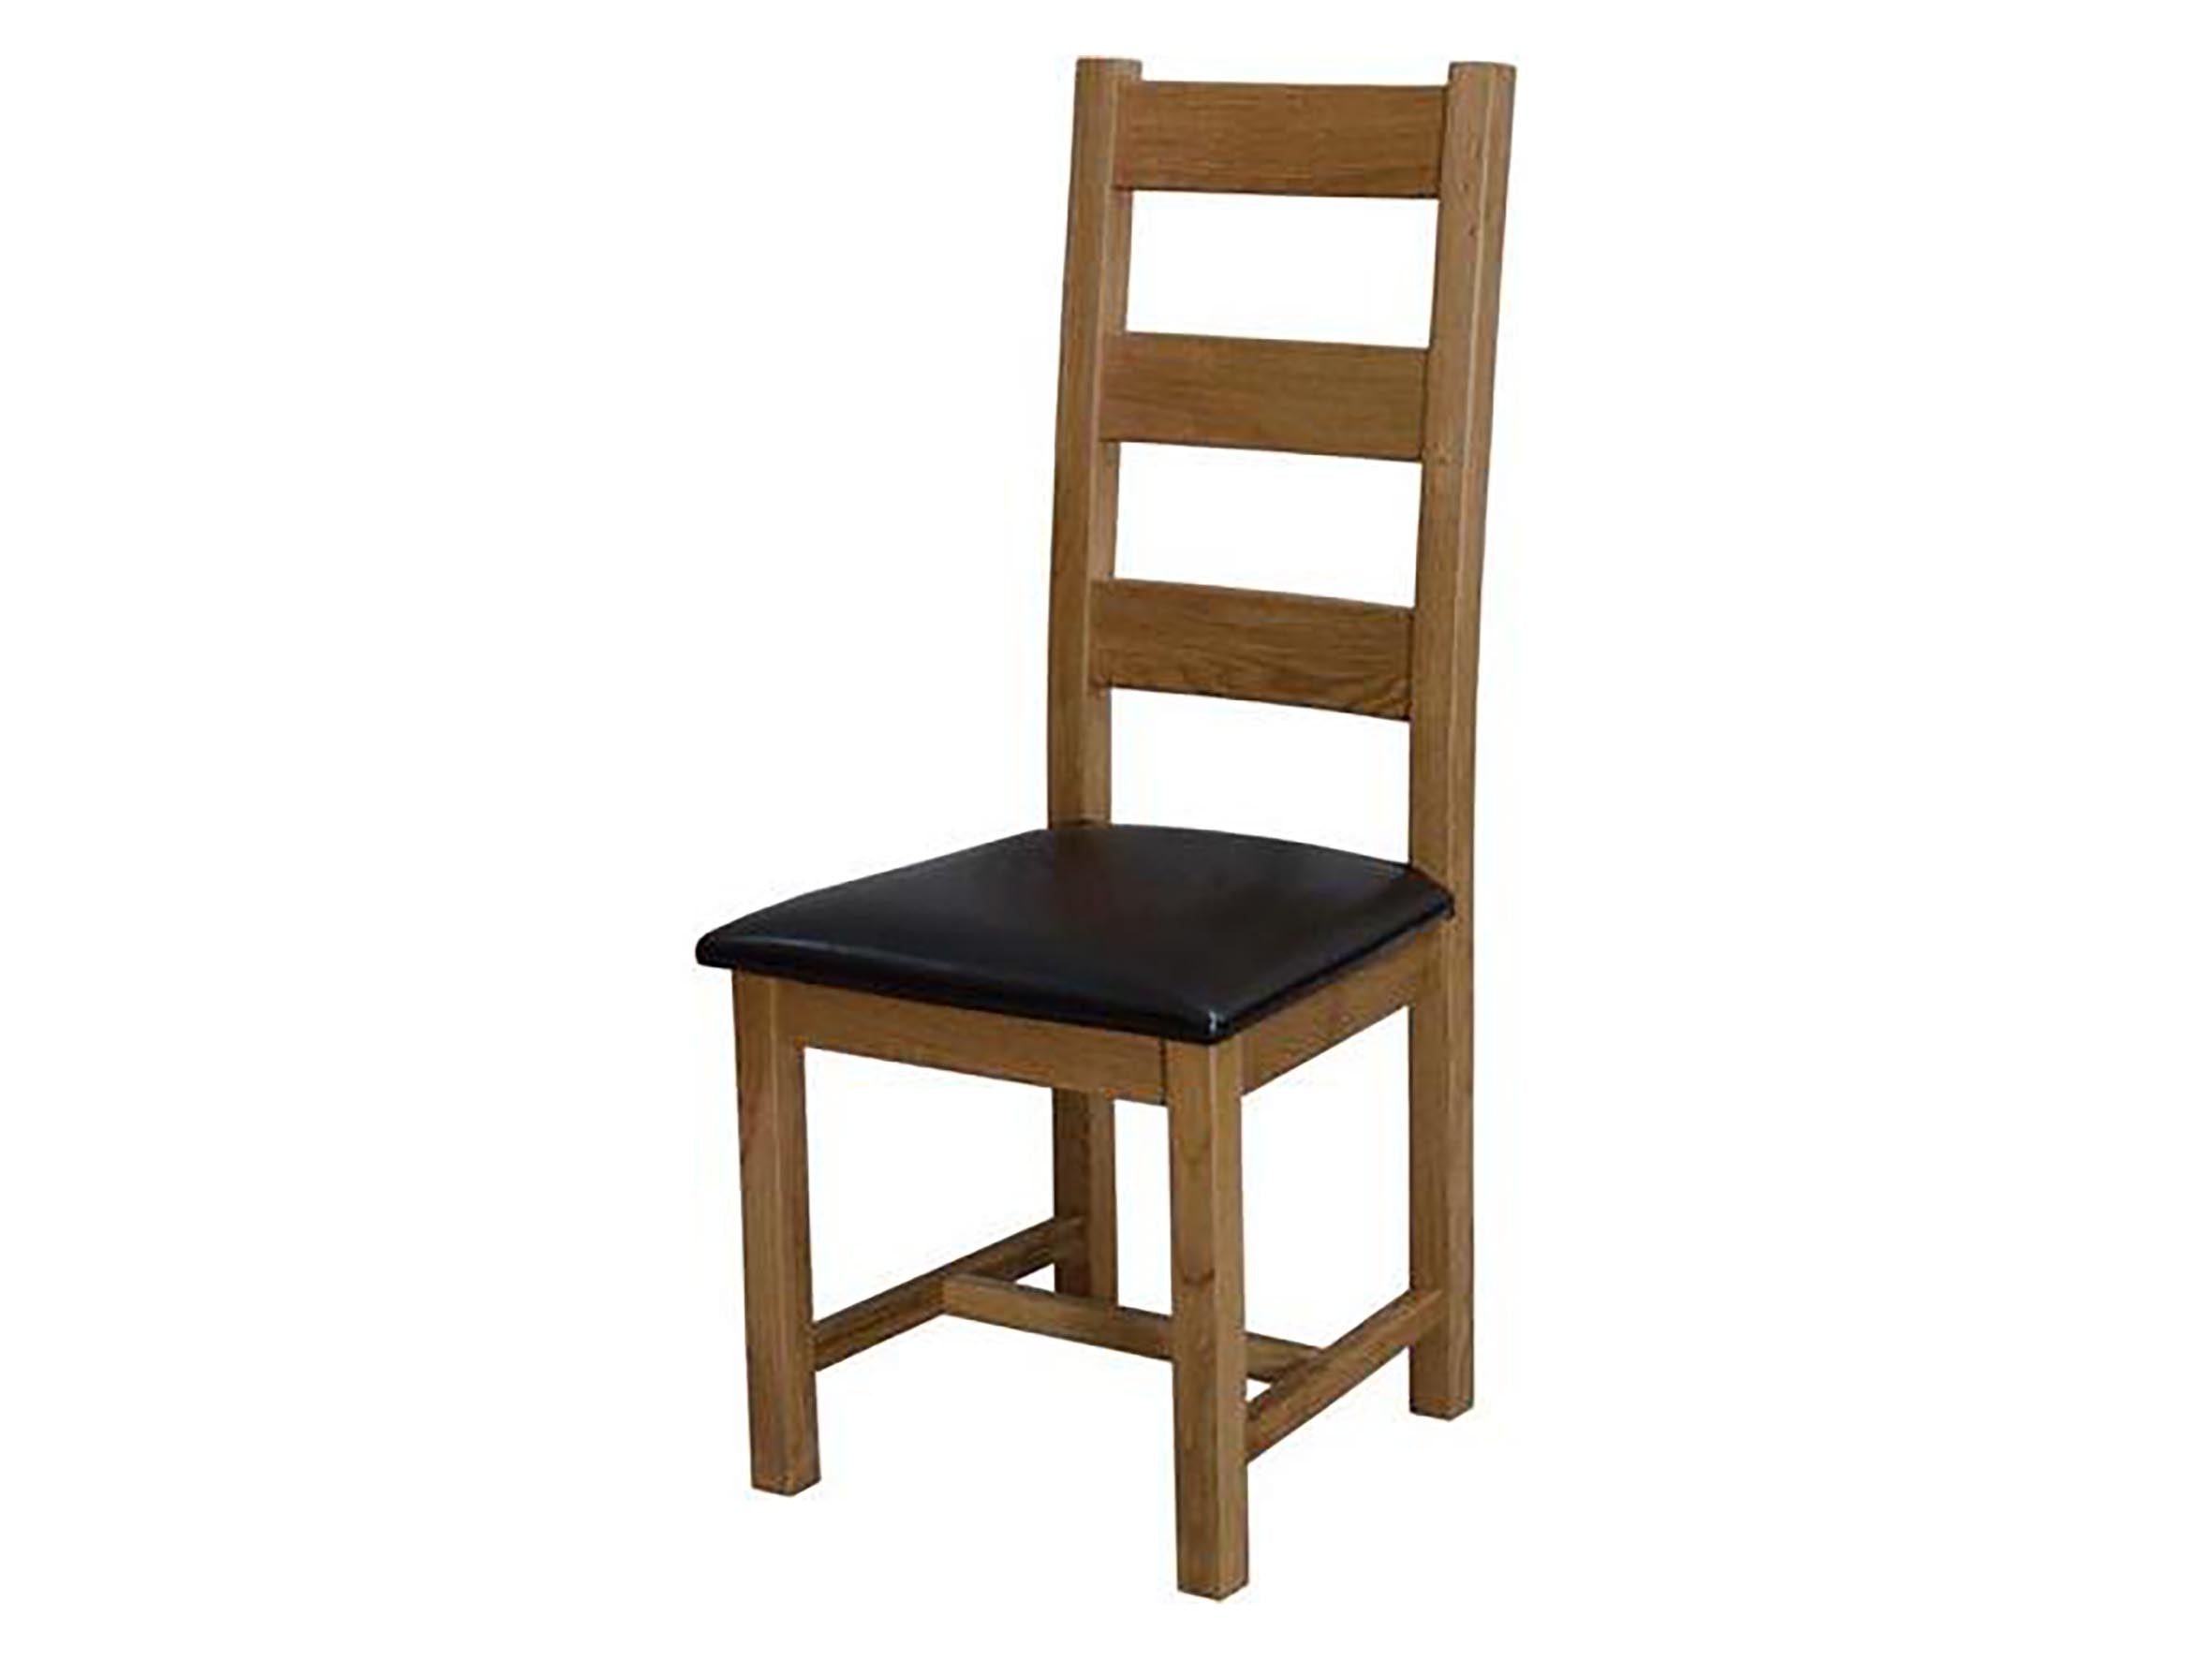 Dalton Ladder Back Dining Chair - 100% solid oak furniture